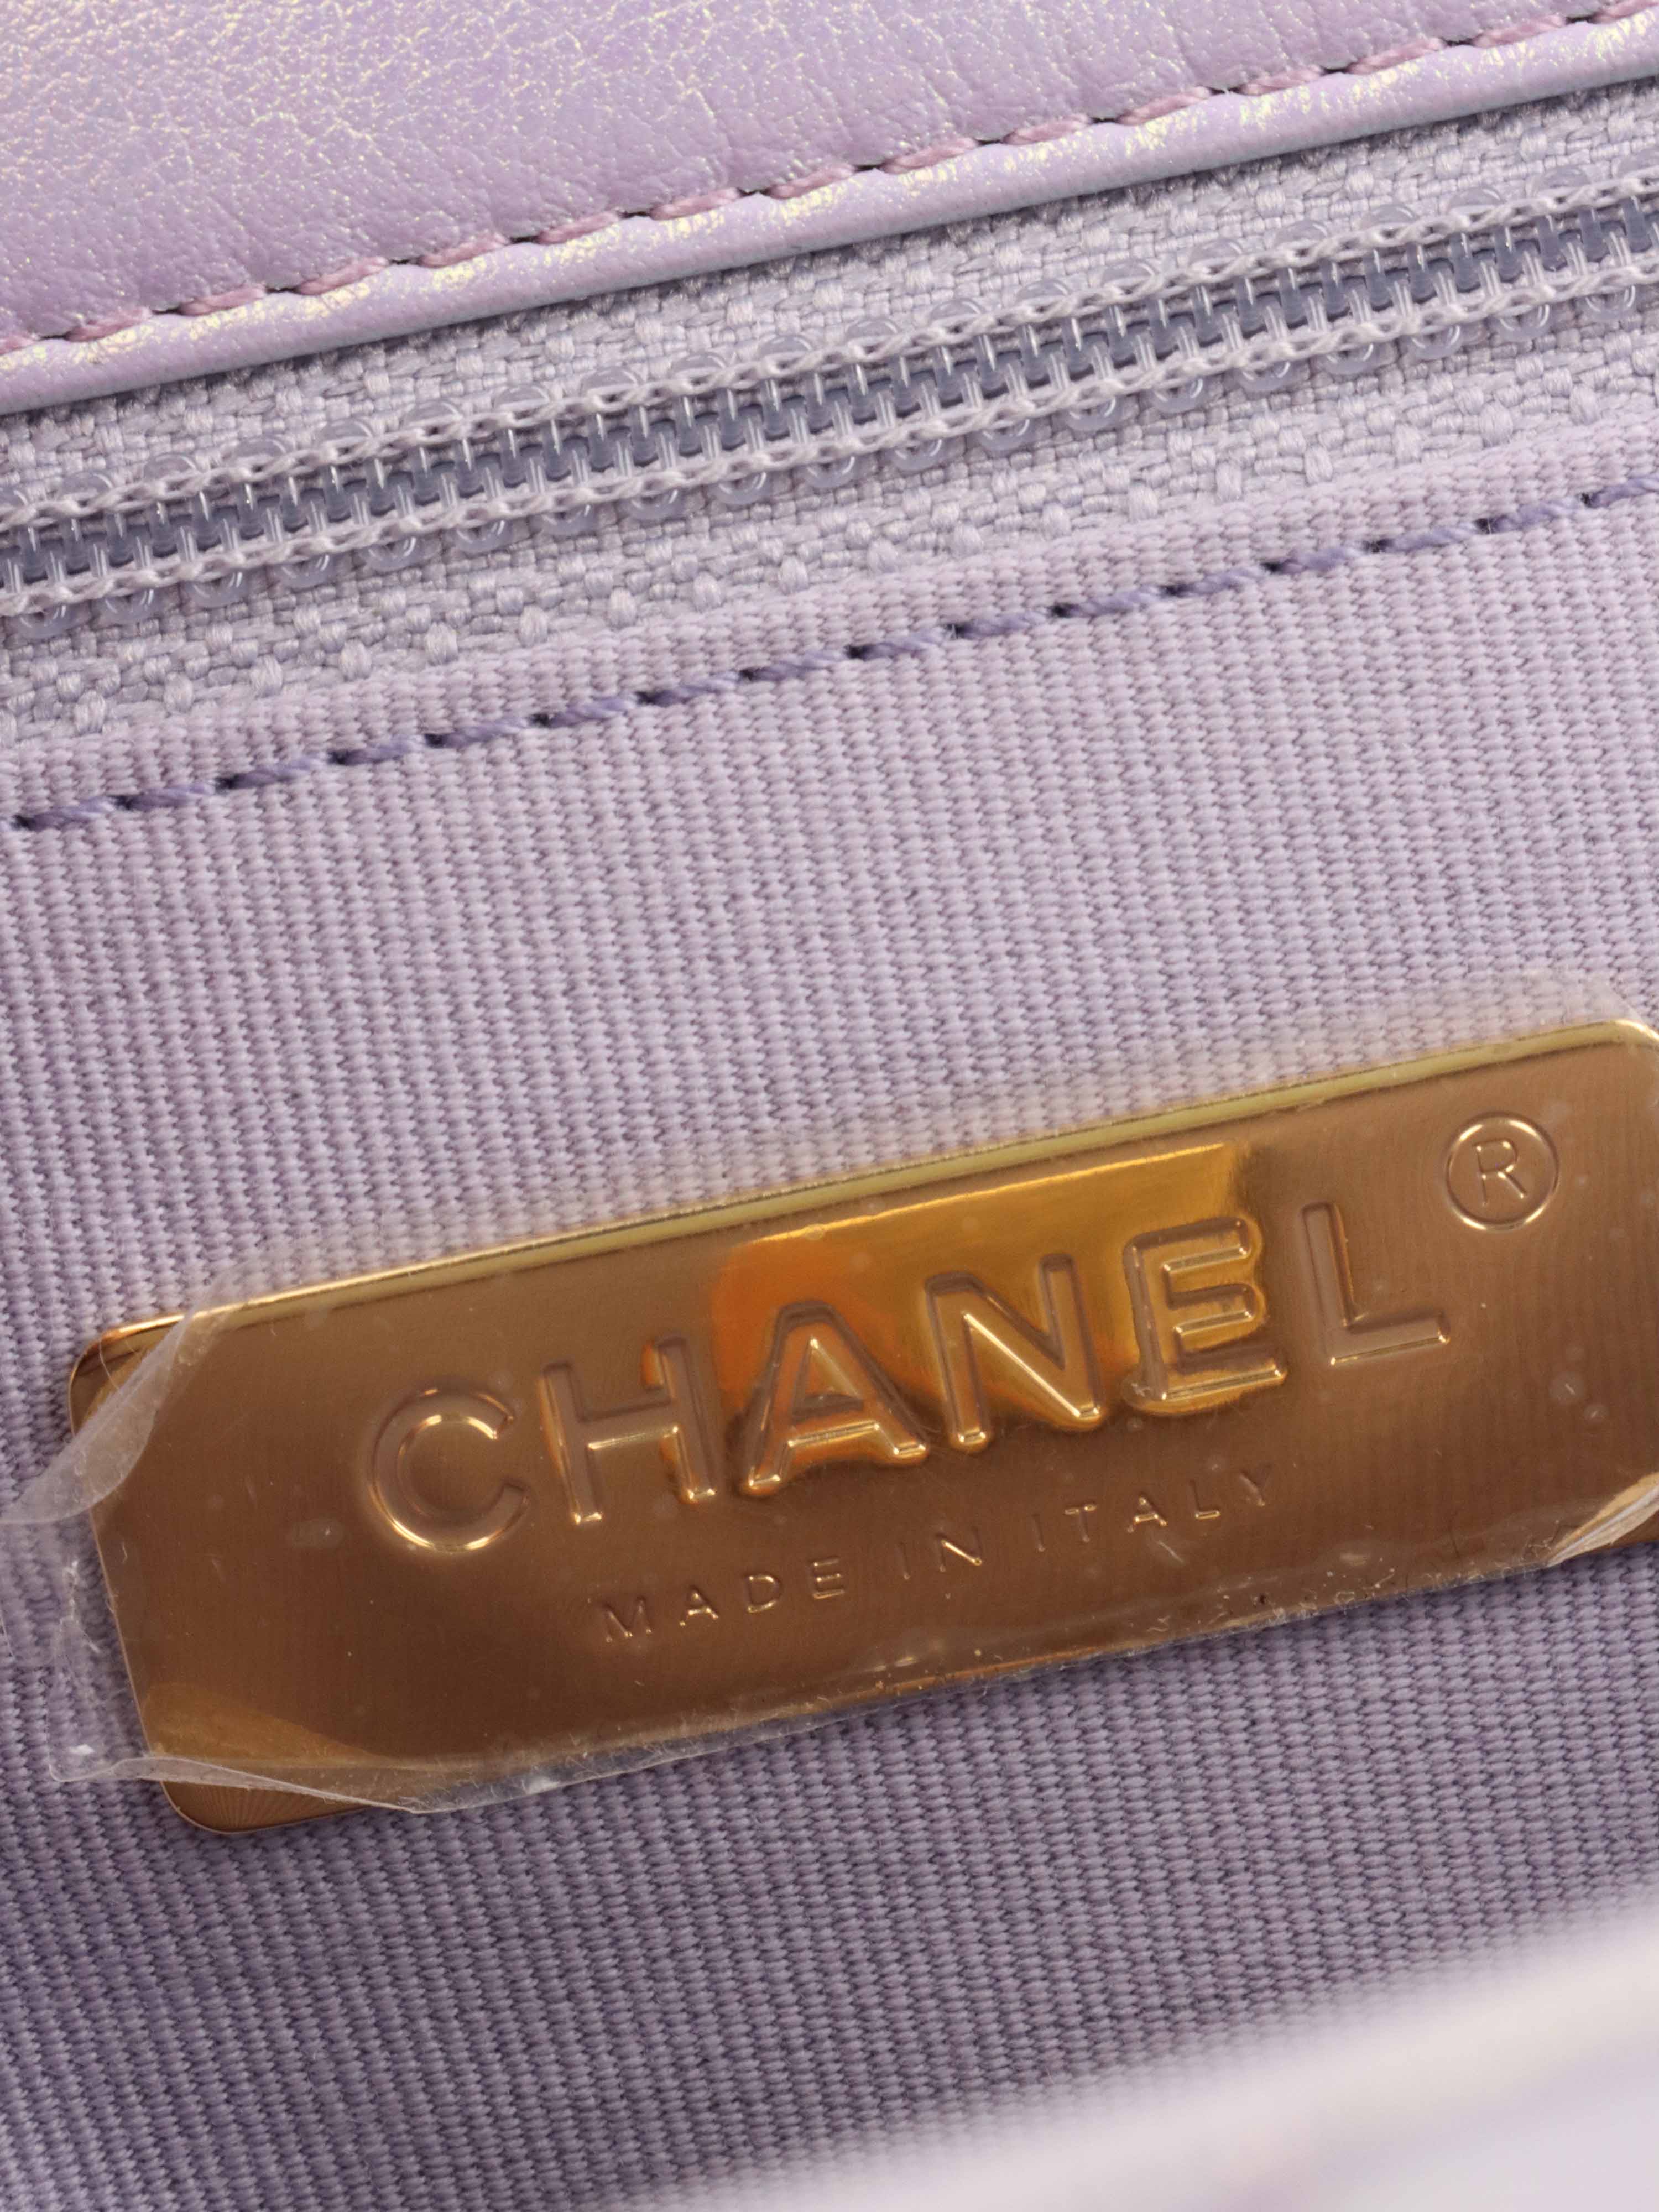 Chanel 22P Iridescent Light Purple Calfskin Quilted Small 19 Bag.